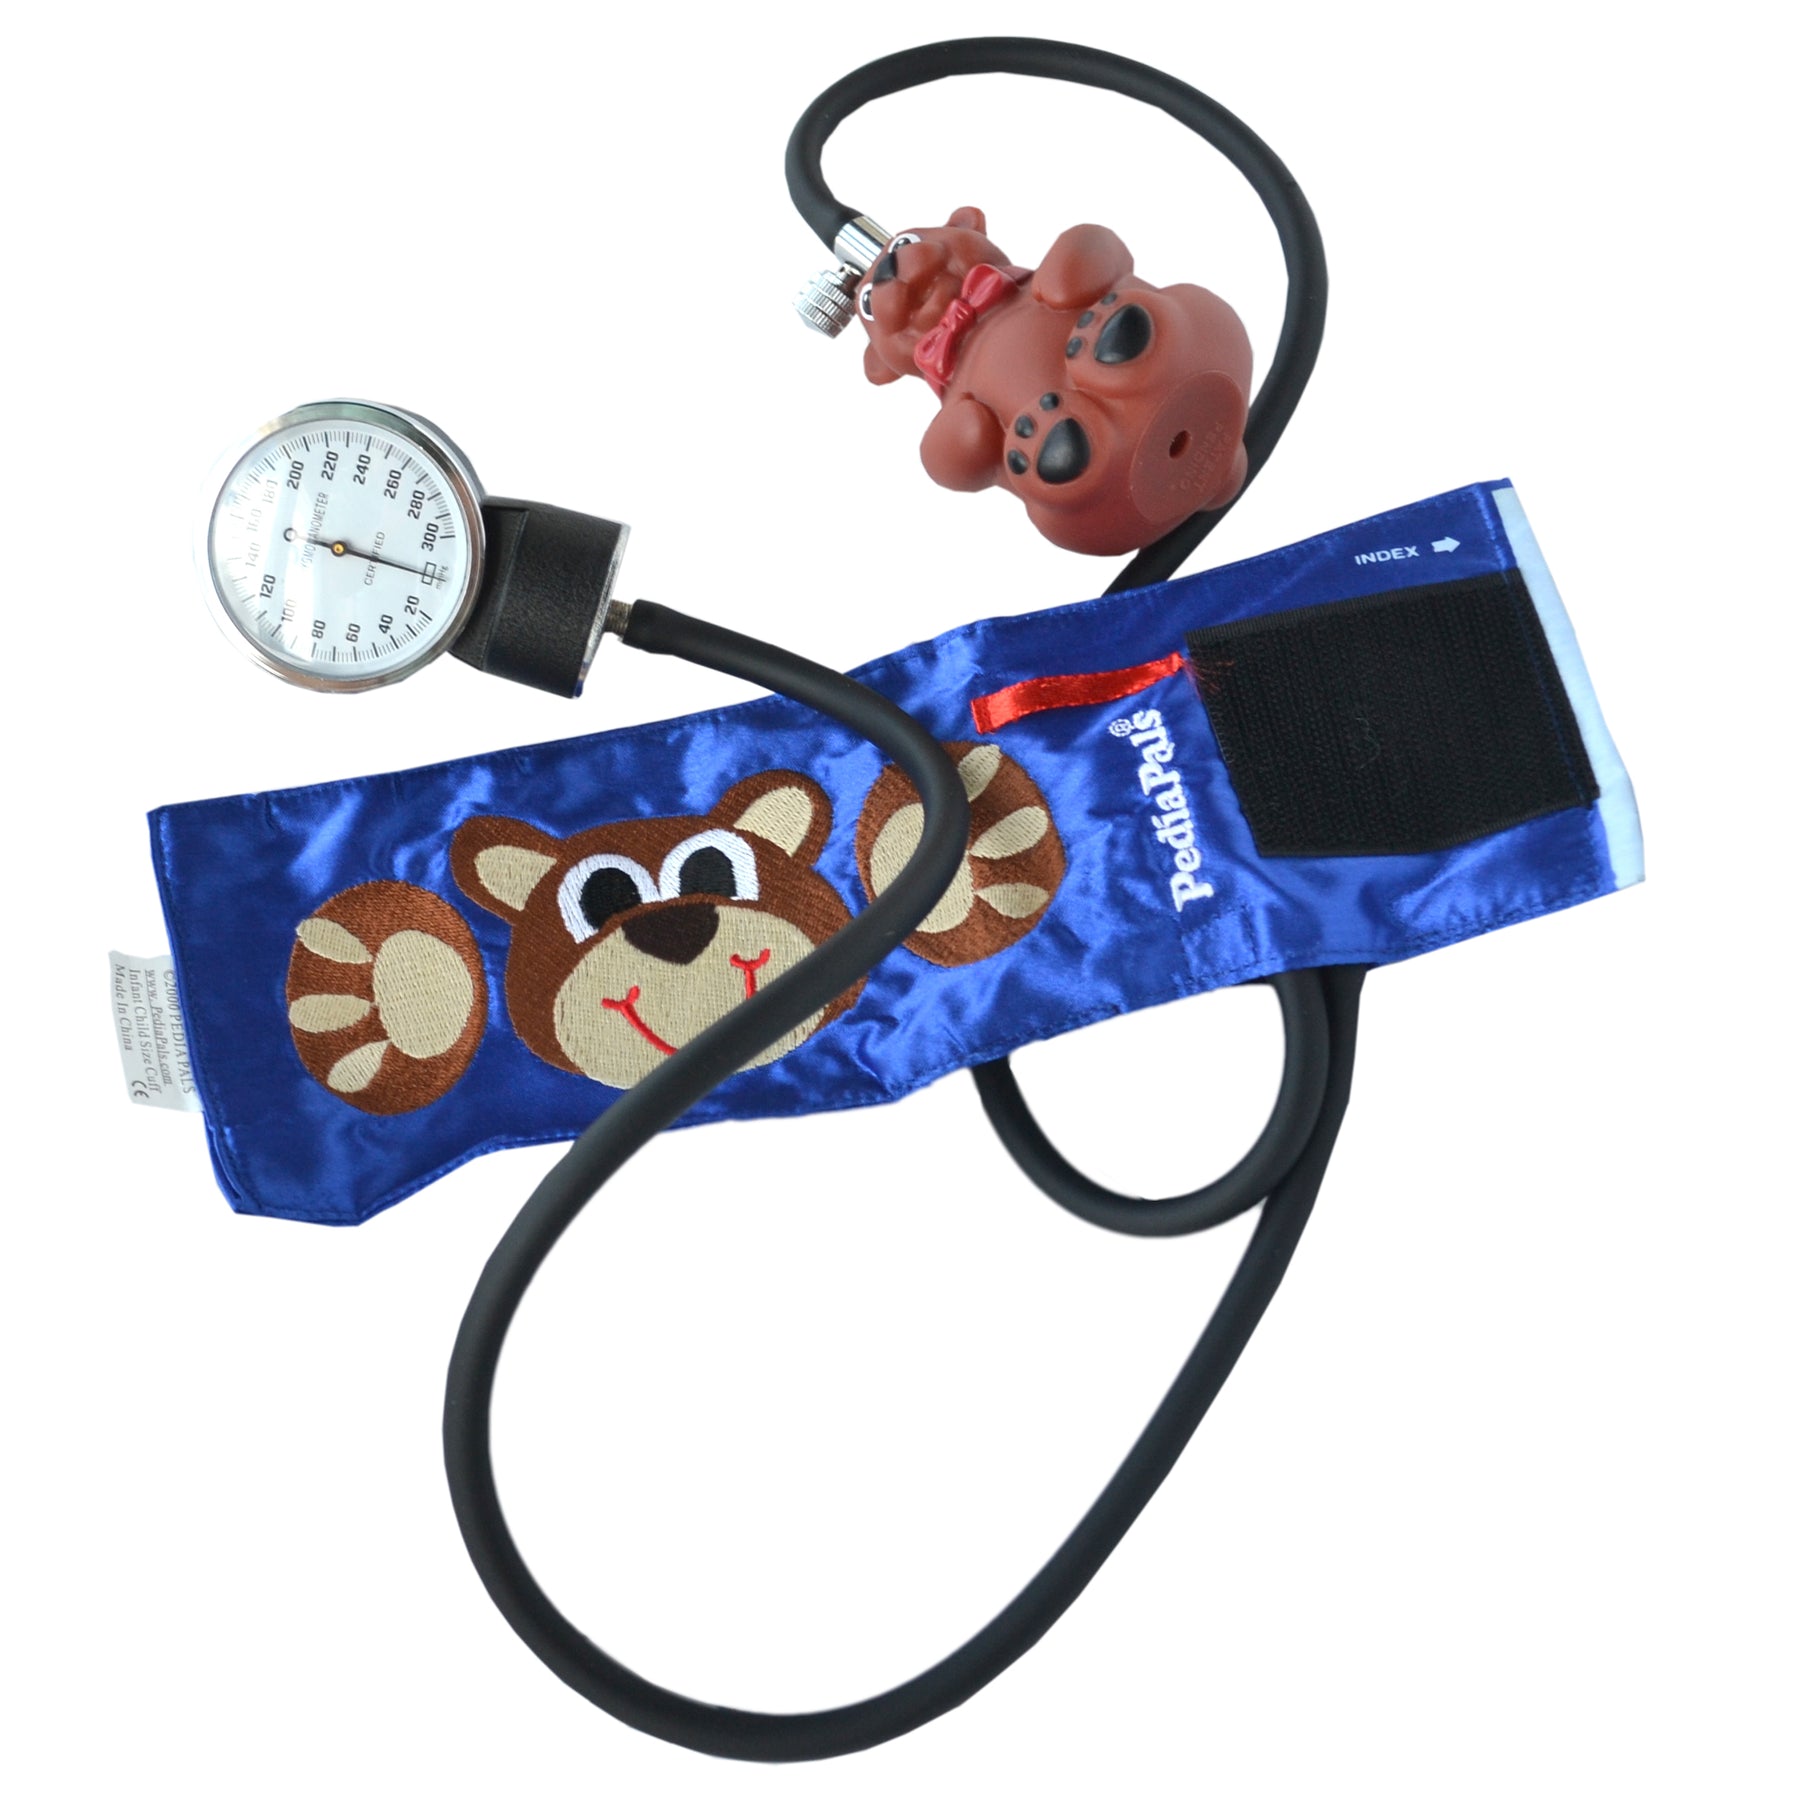 Pedia Pals Benjamin Bear Blood Pressure Kits